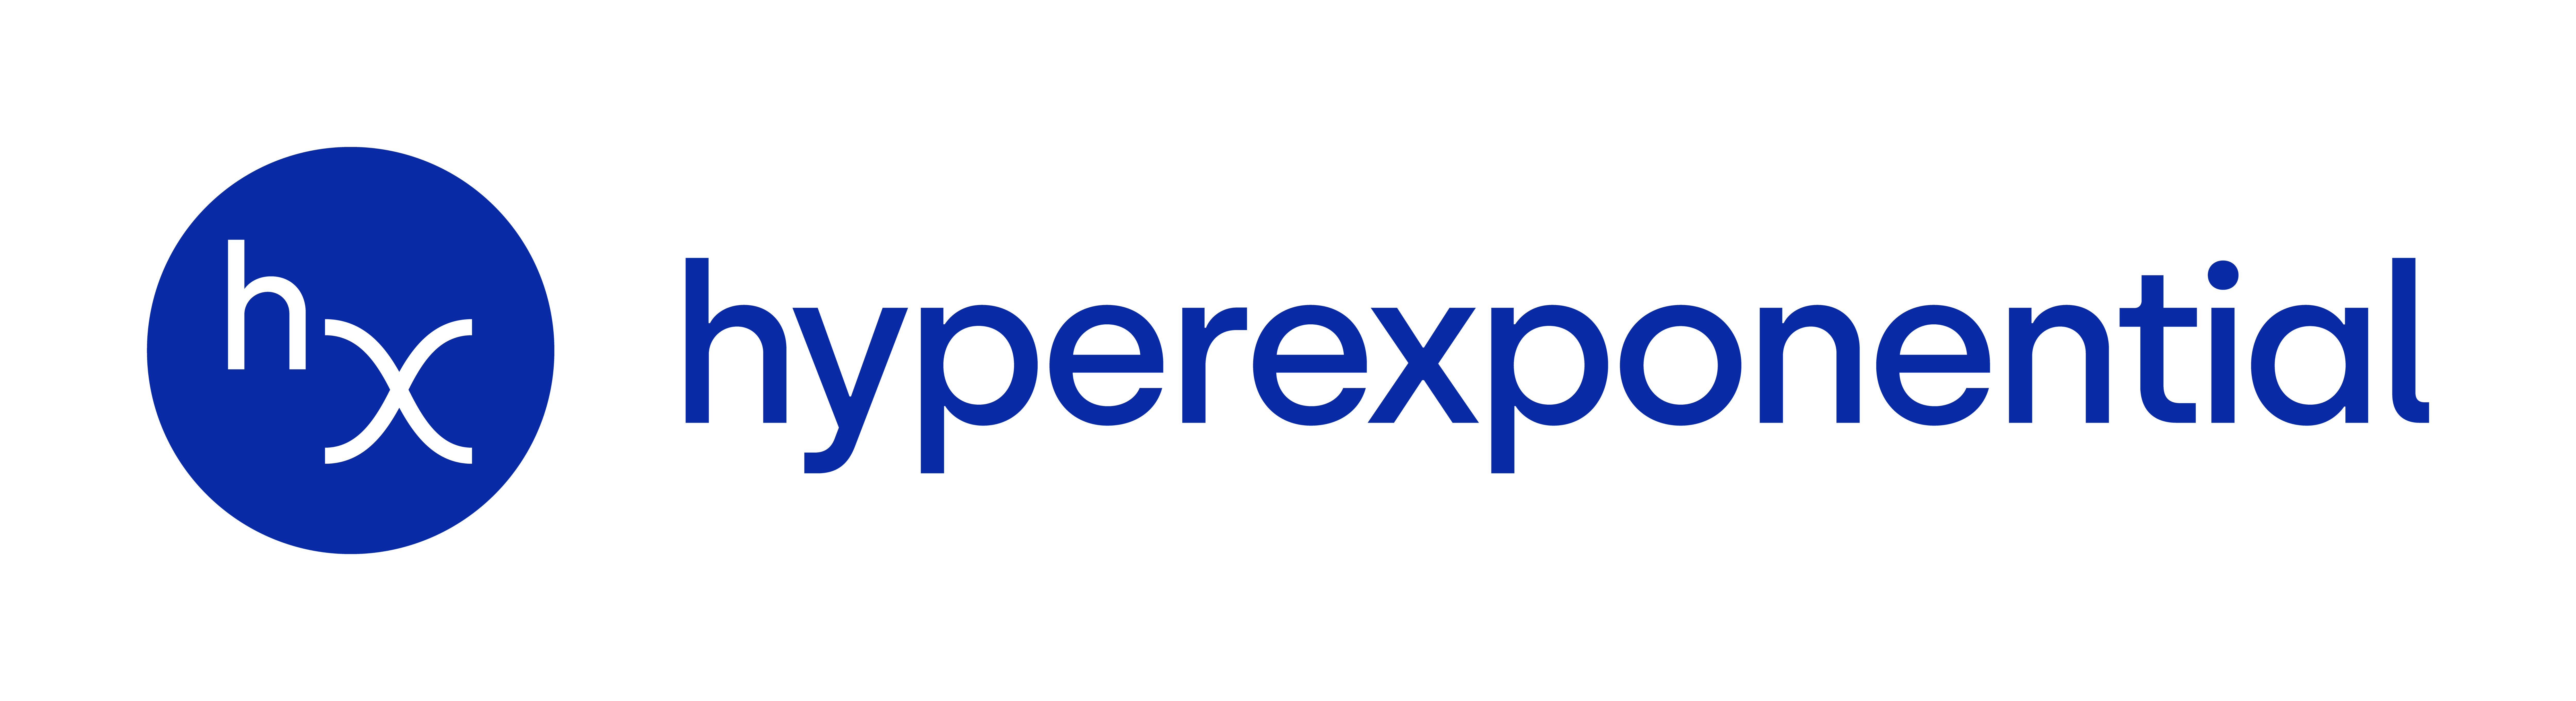 hyper exponential logo